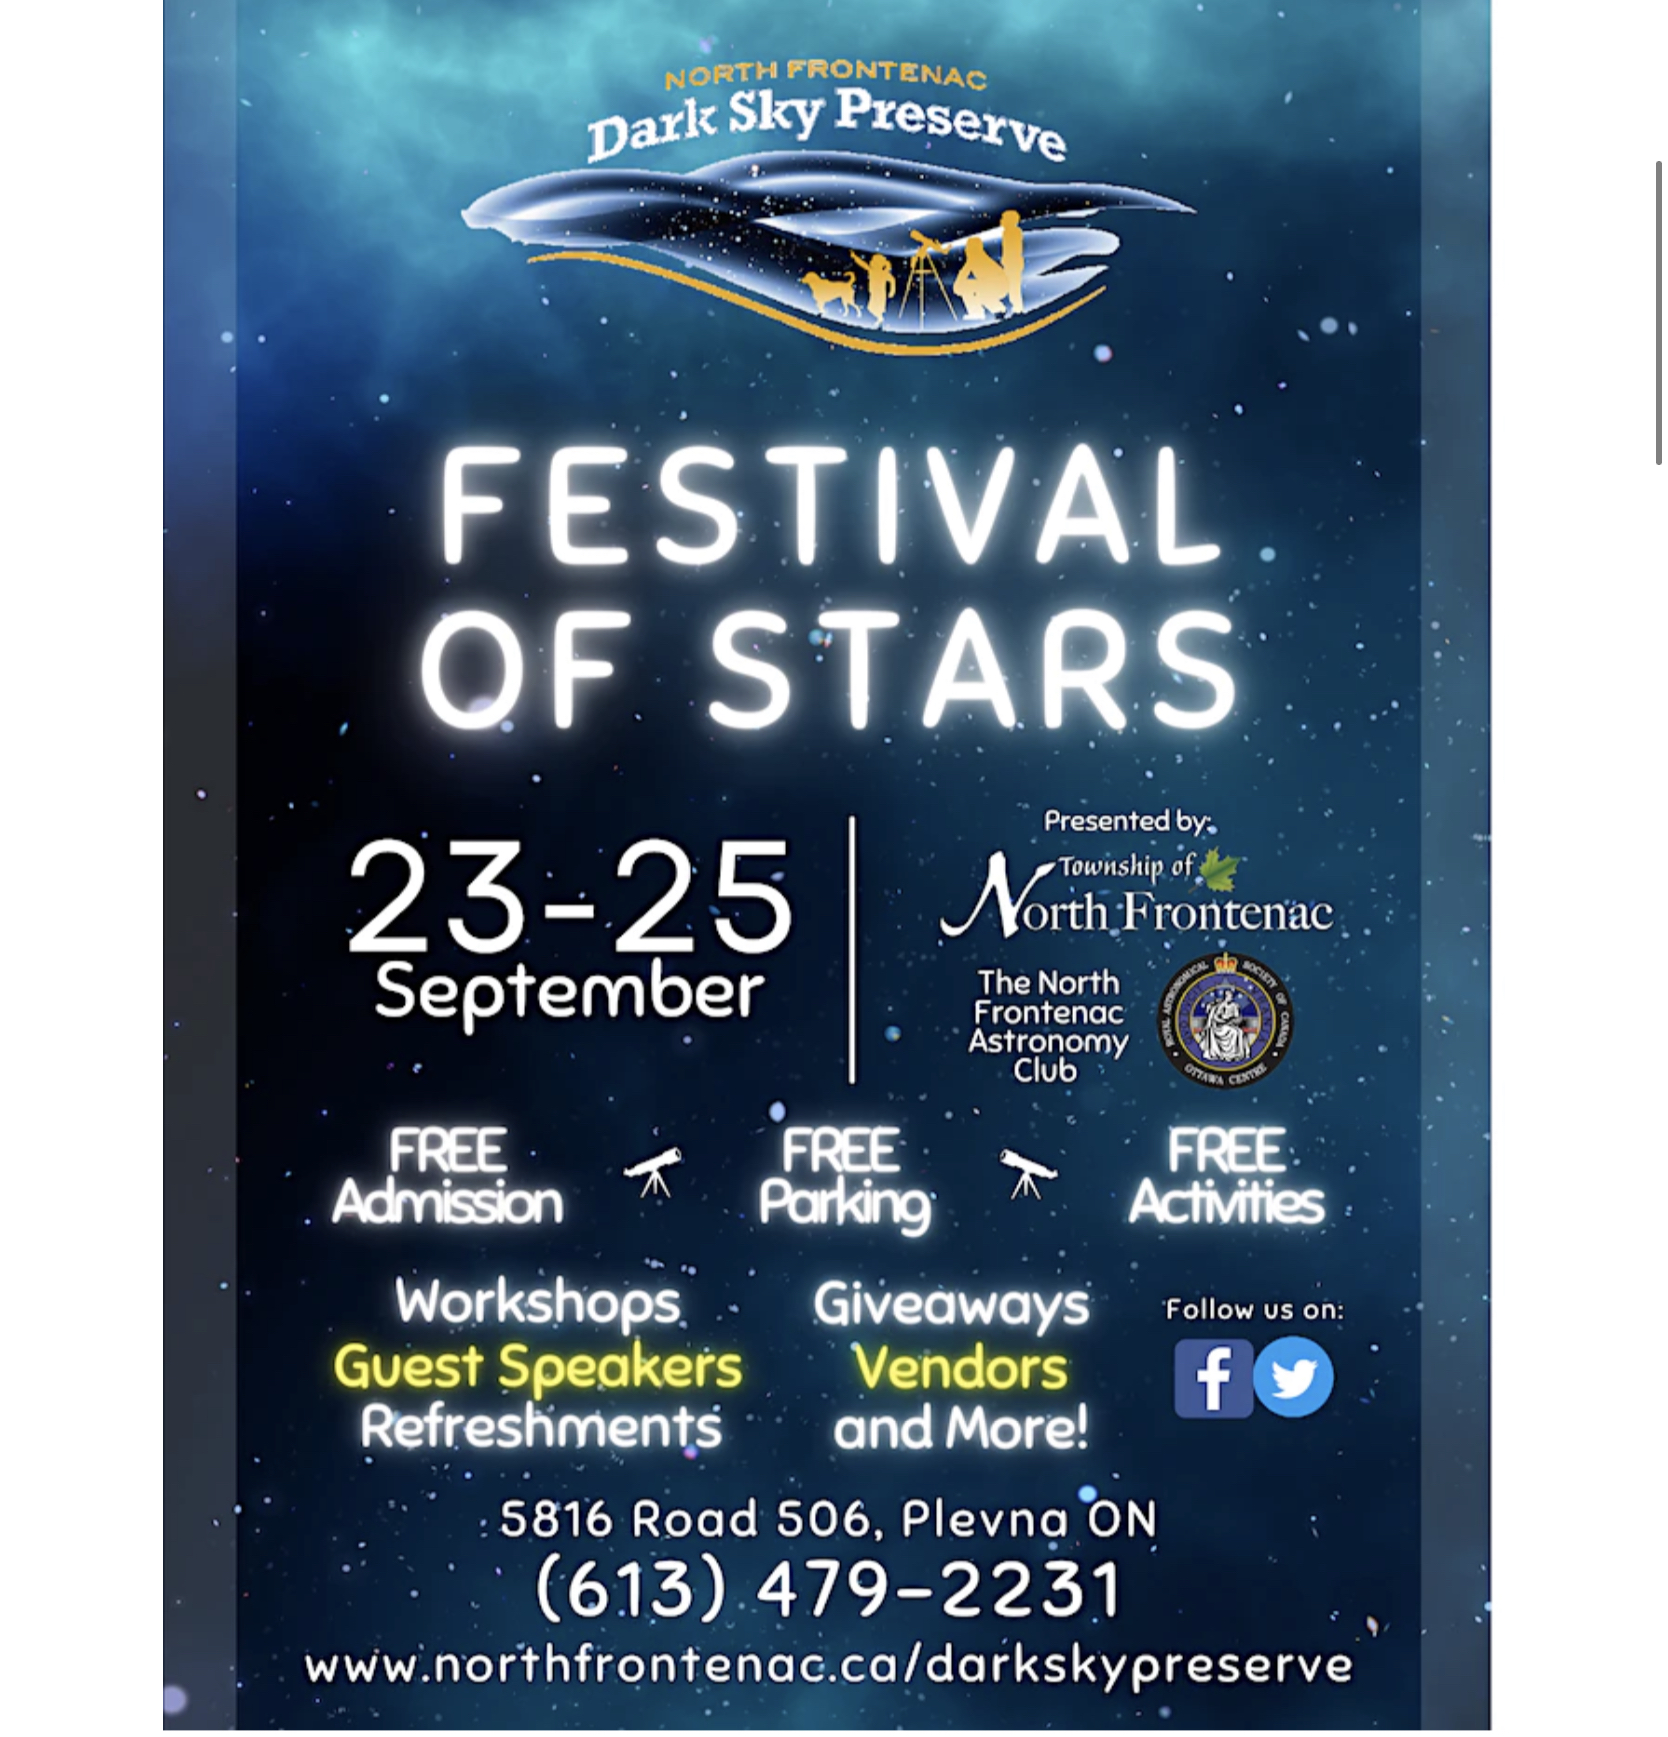 festival-of-stars-north-frontenac-dark-sky-preserve-blurt